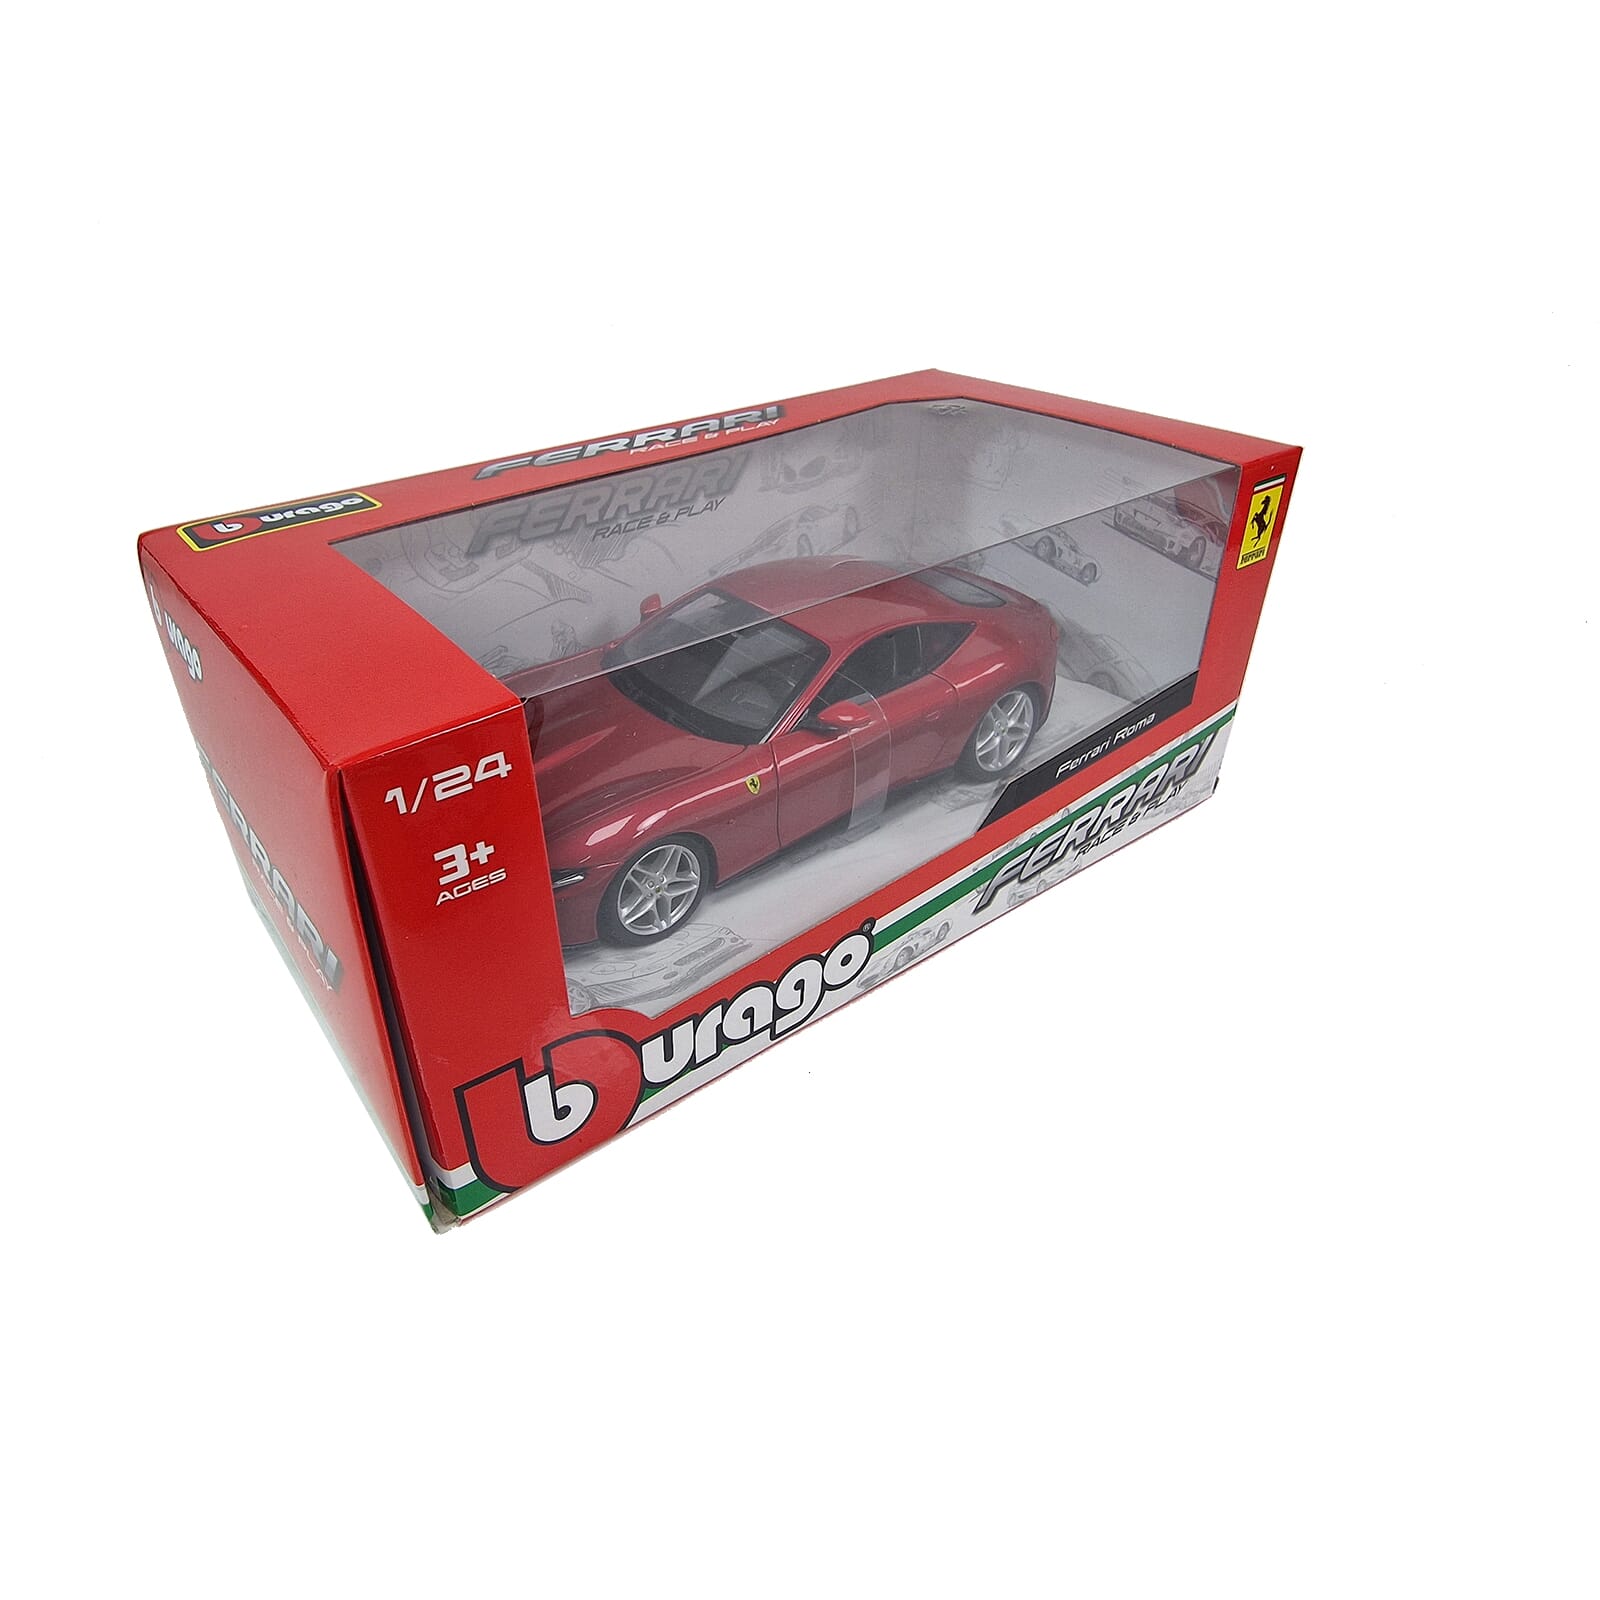 Ferrari Roma 1:24 scale Diecast Model Car by Bburago in Red